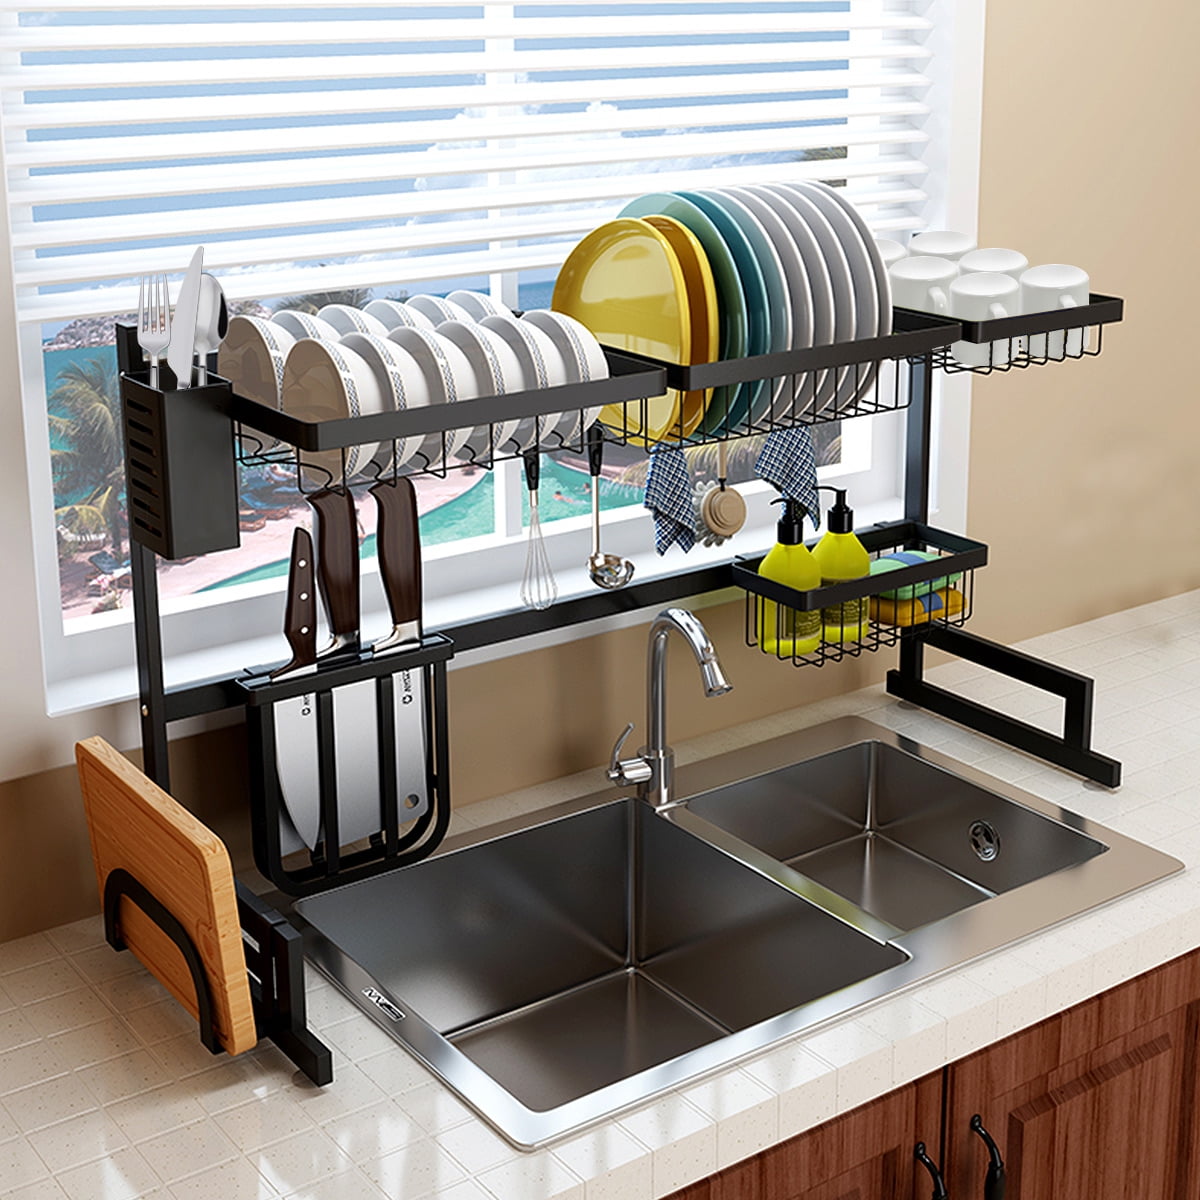 Plate Dish Holder Drying Storage Rack Sink Cutlery Shelf Organizer Decor 